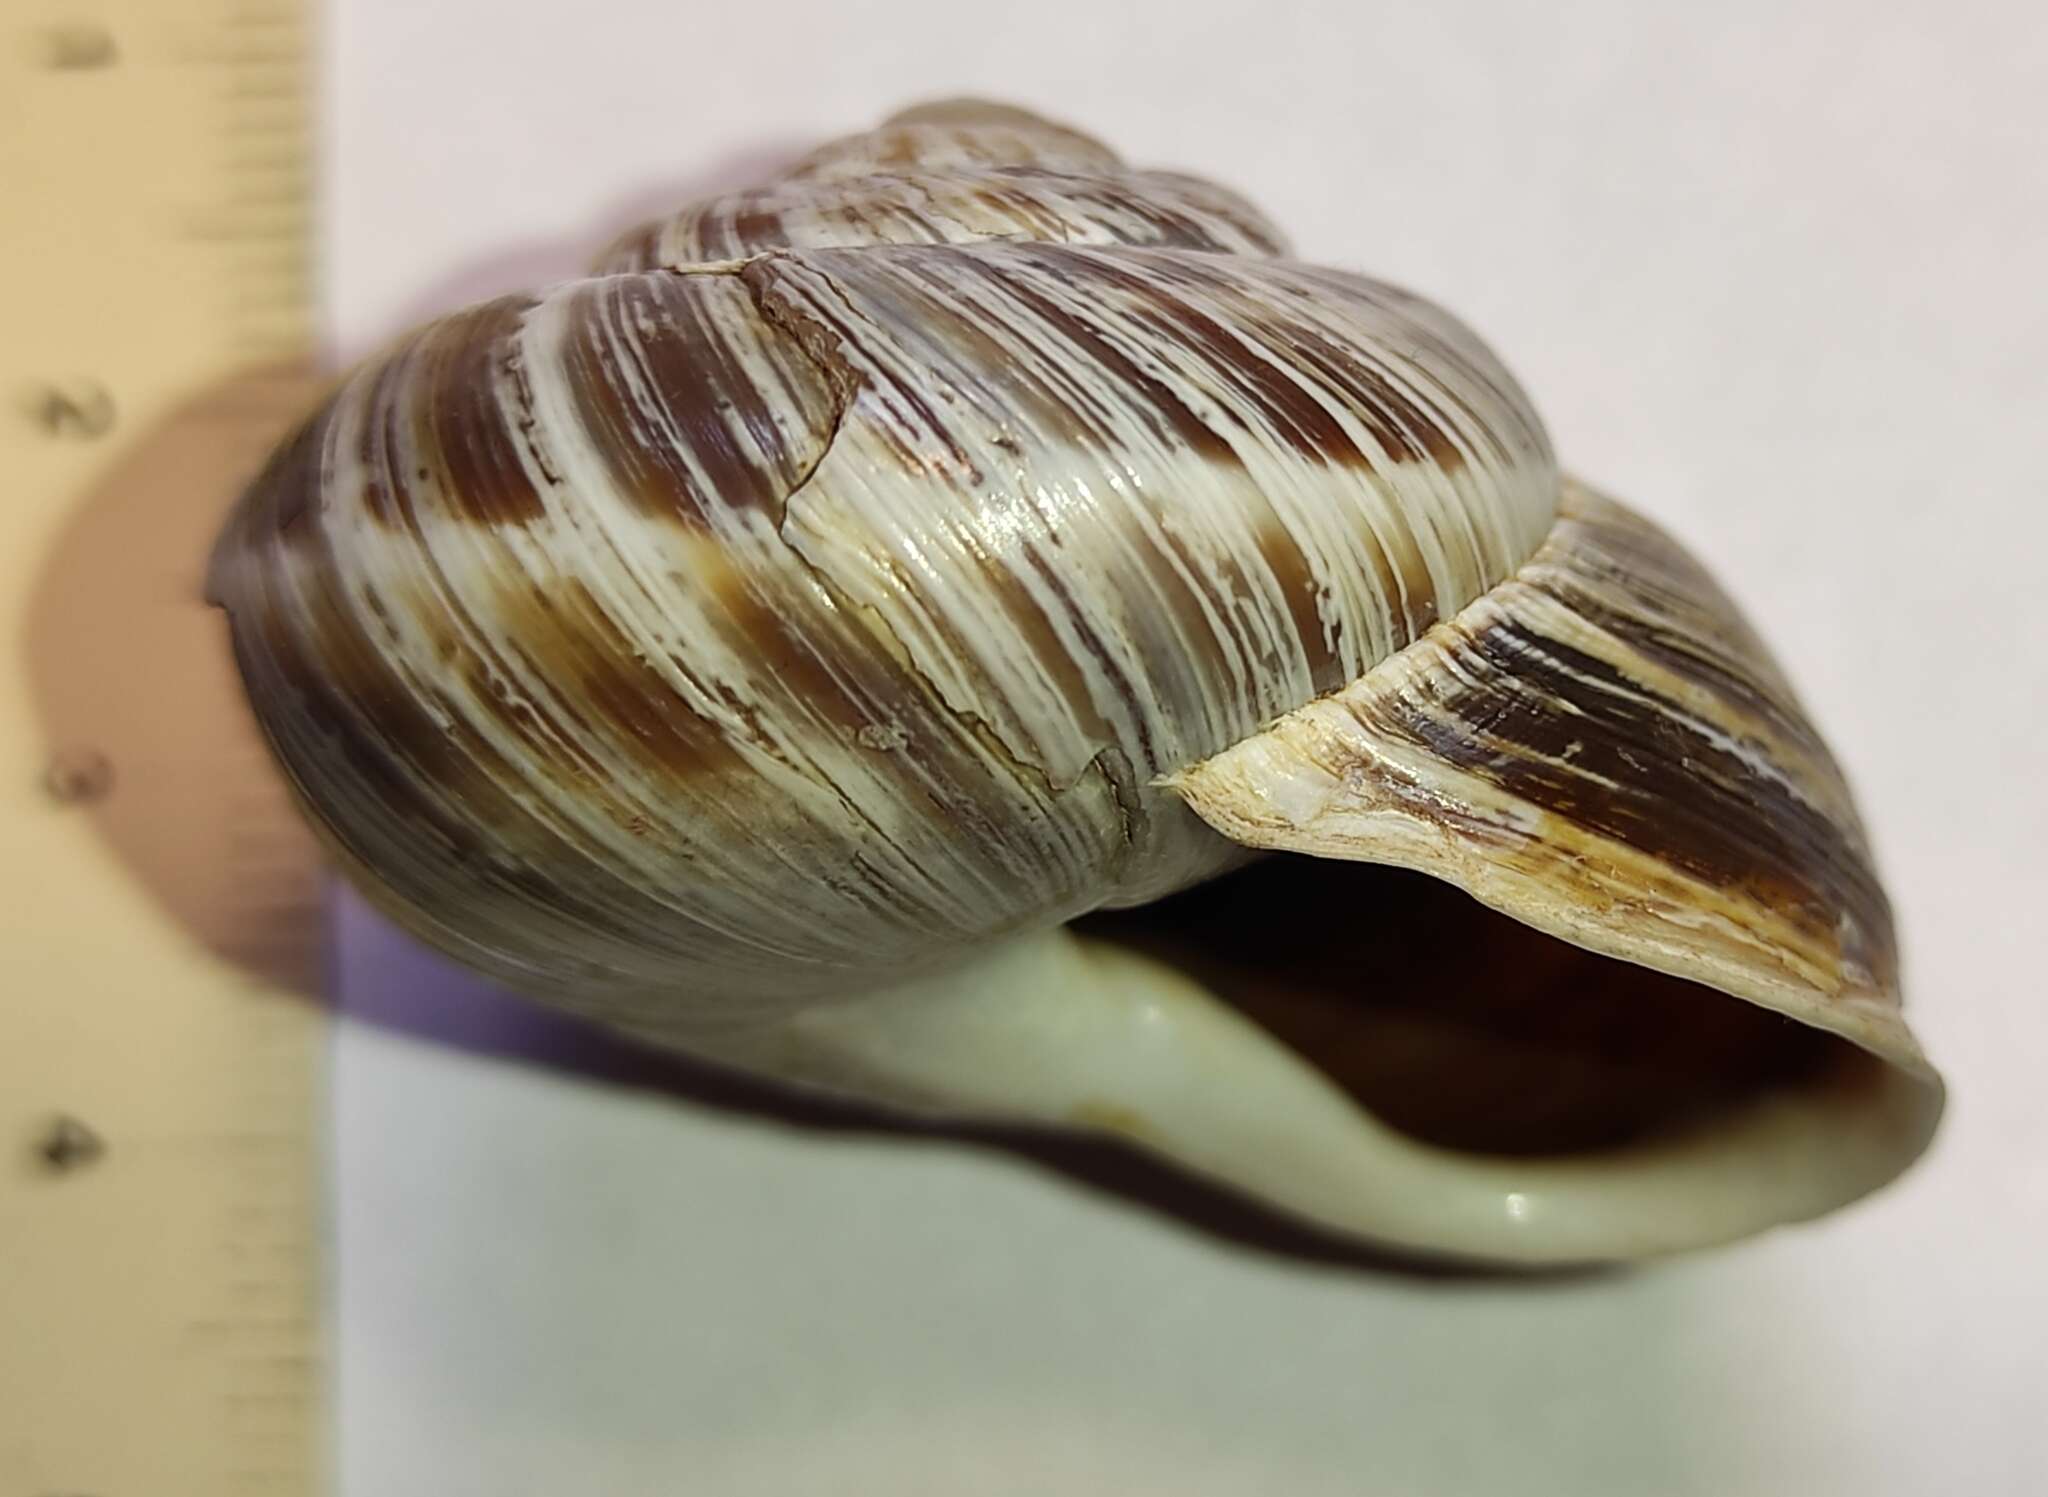 Image of Rock Snail